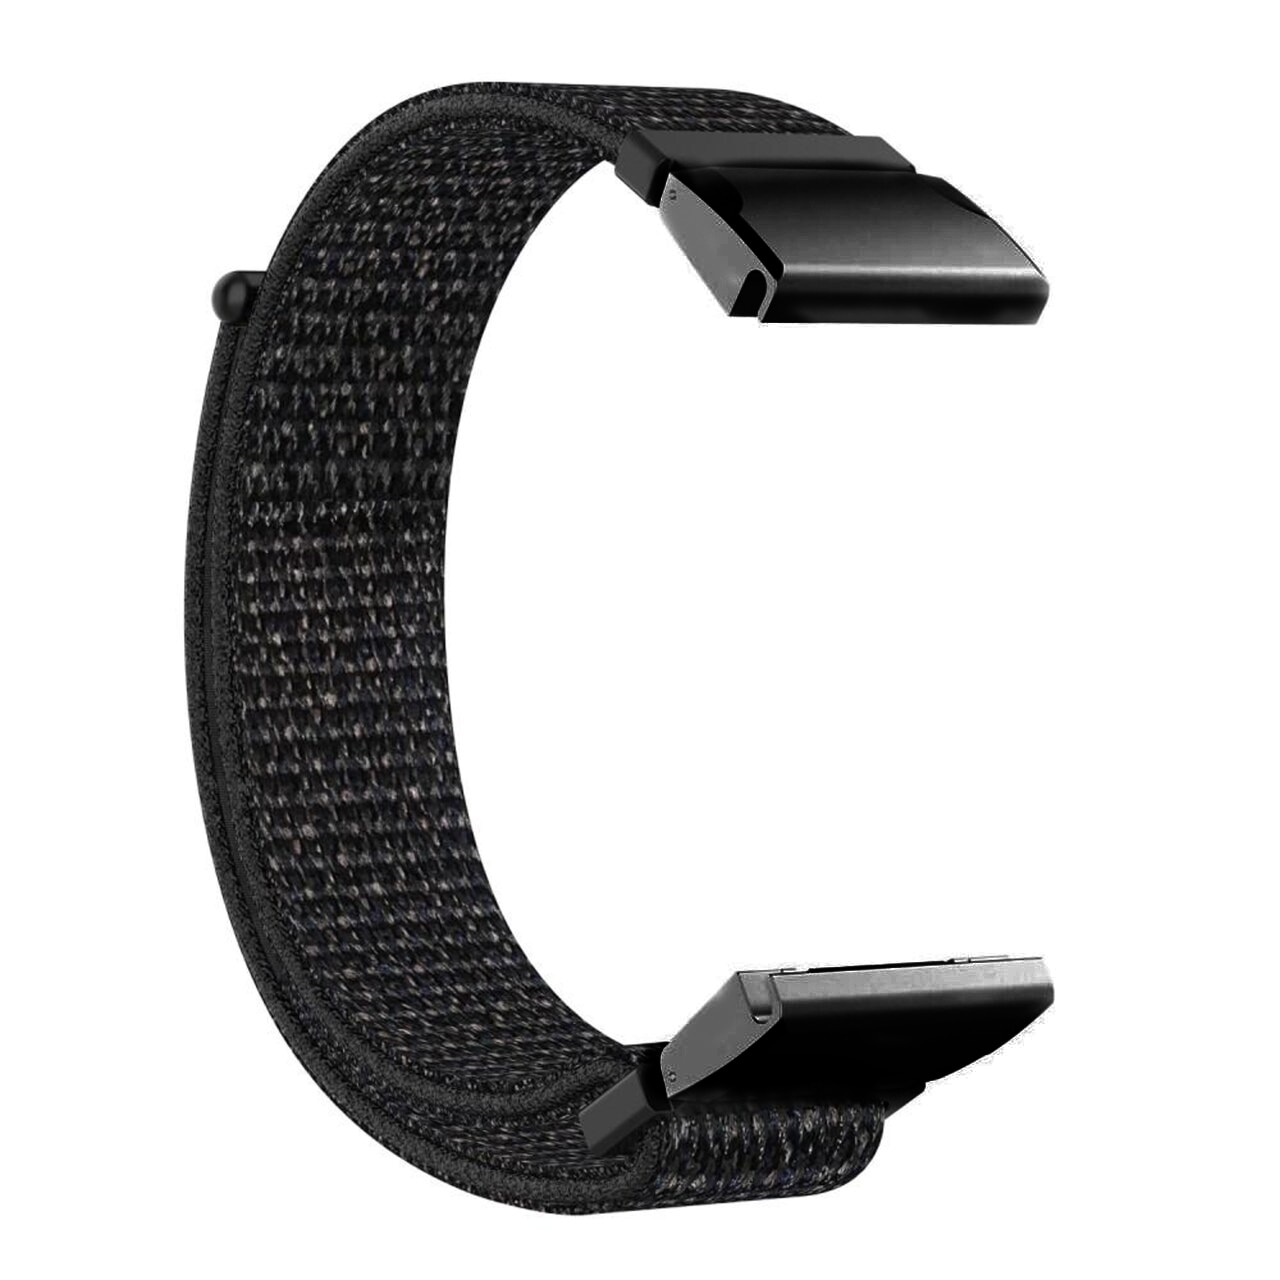 Bracelet en nylon Garmin Fenix 5S/5S Plus, noir